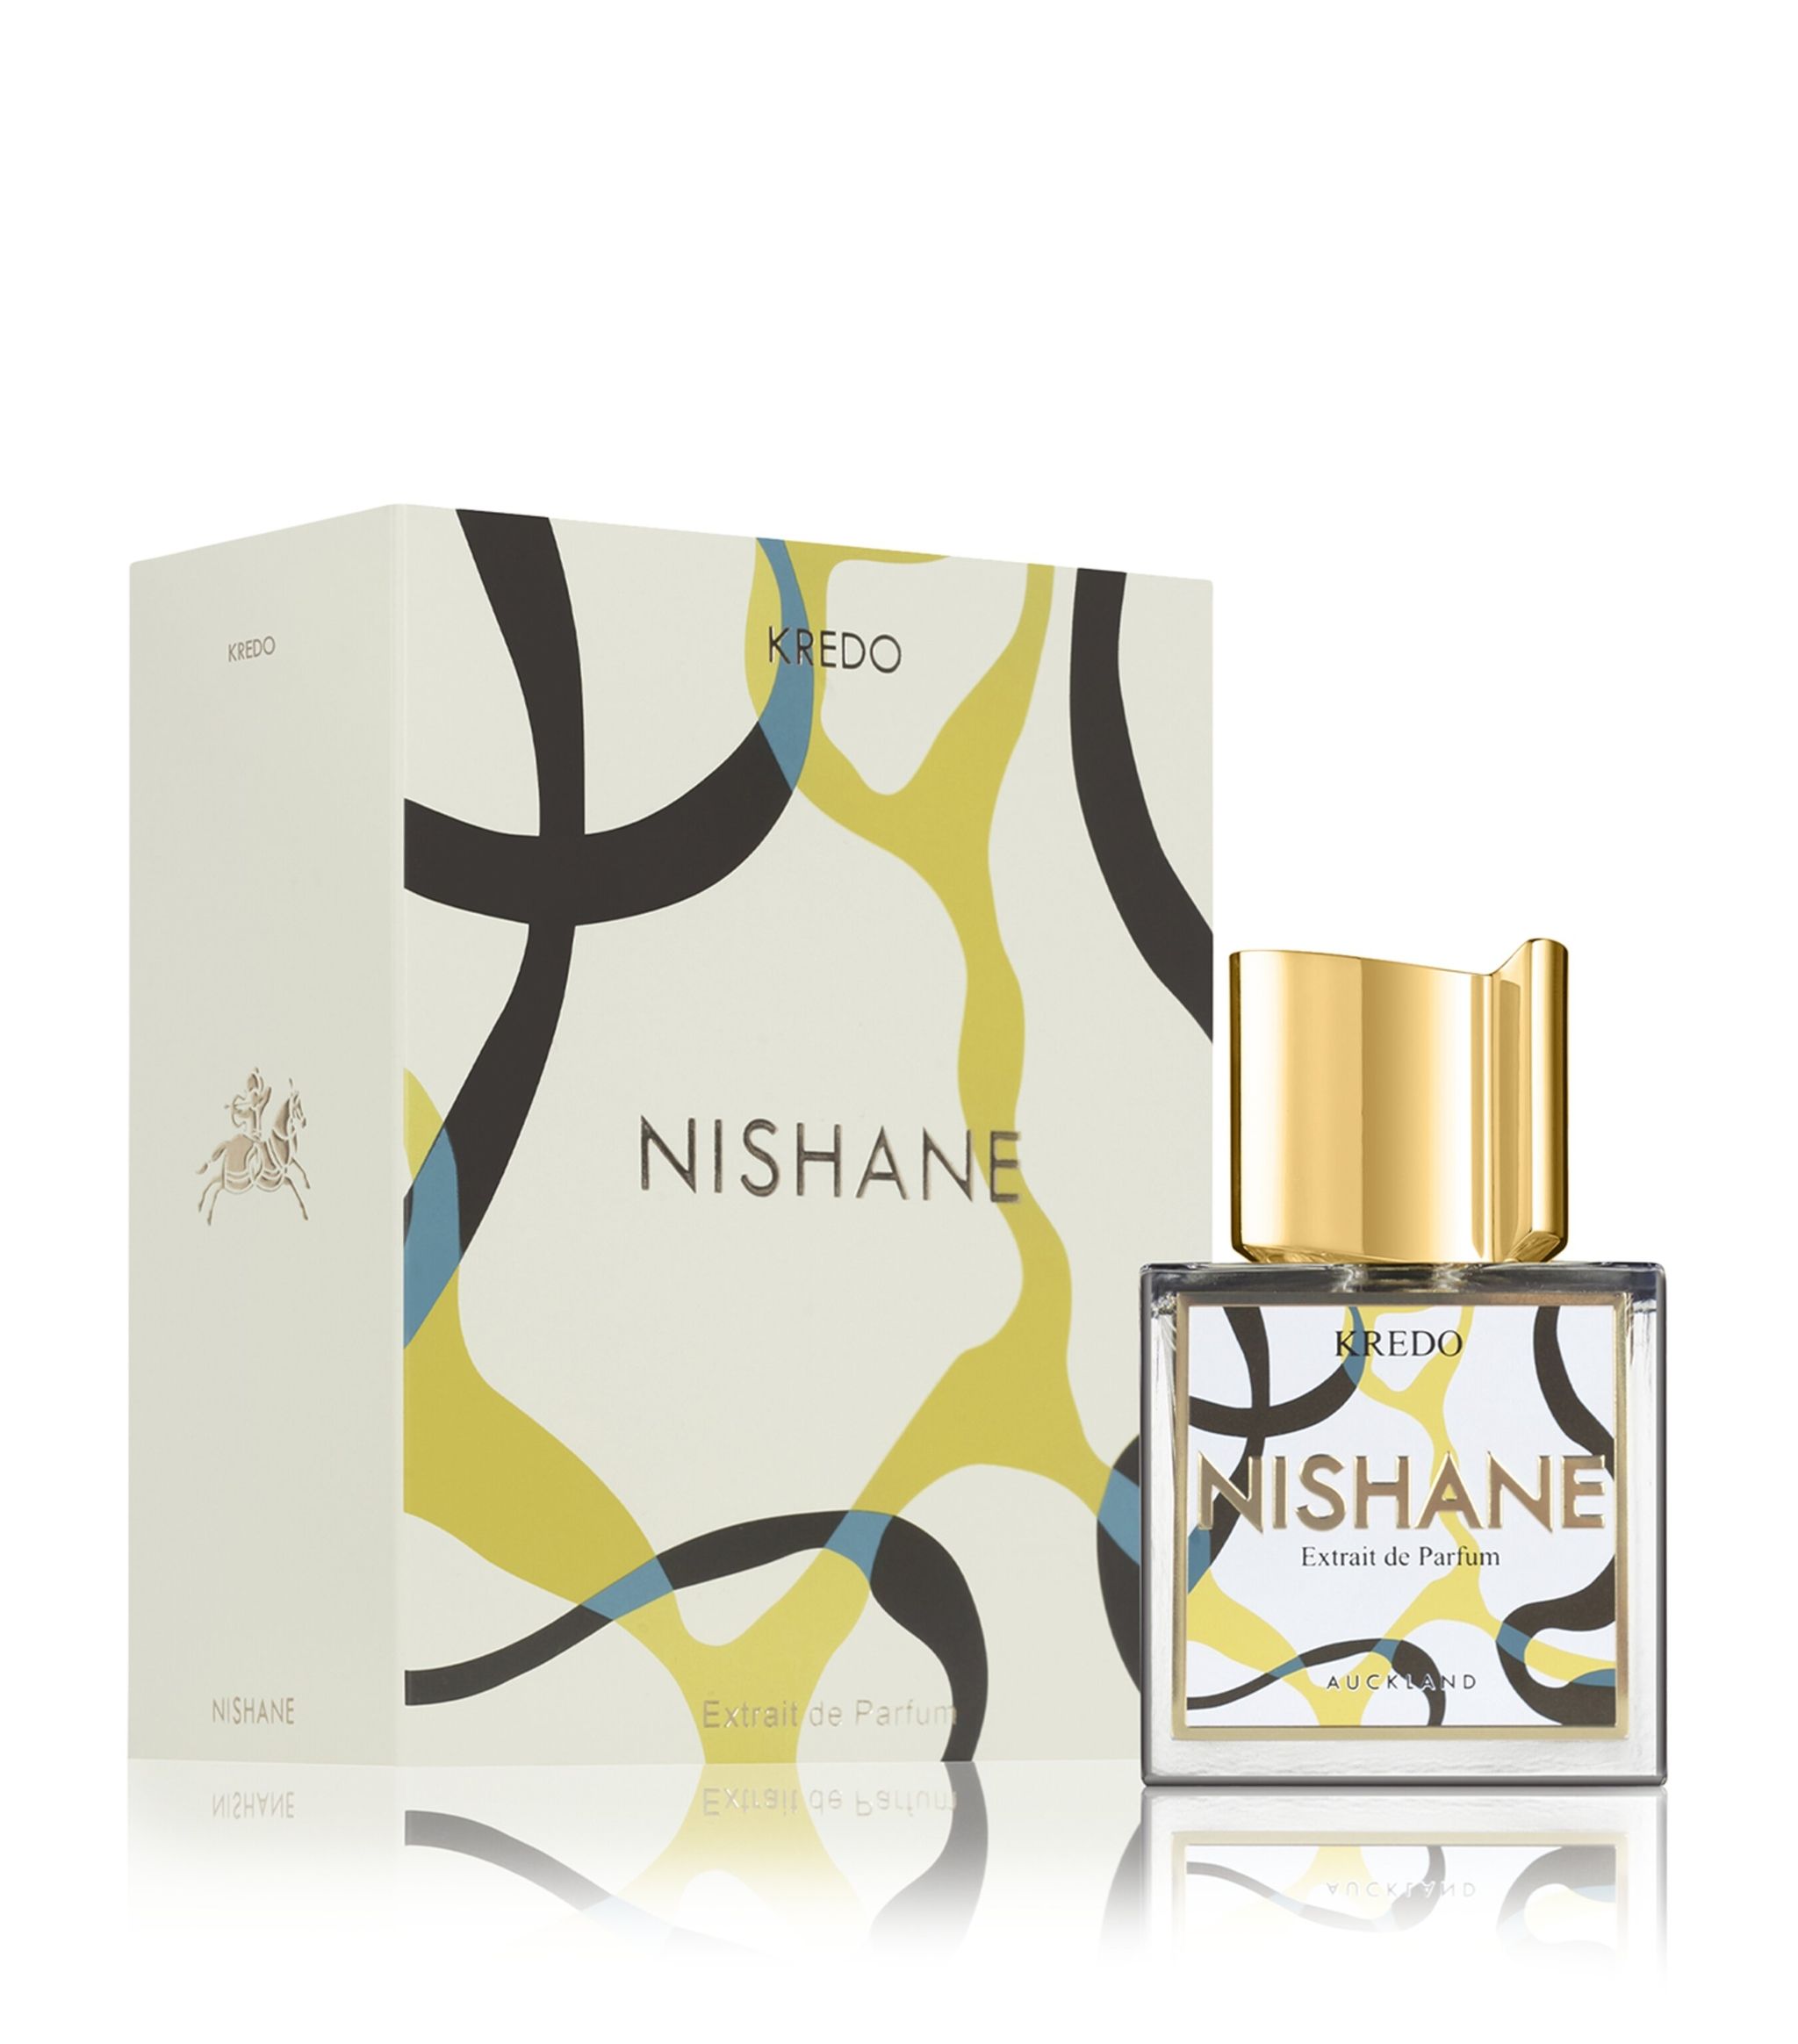 Nishane Kredo Extrait de Parfum Unisex